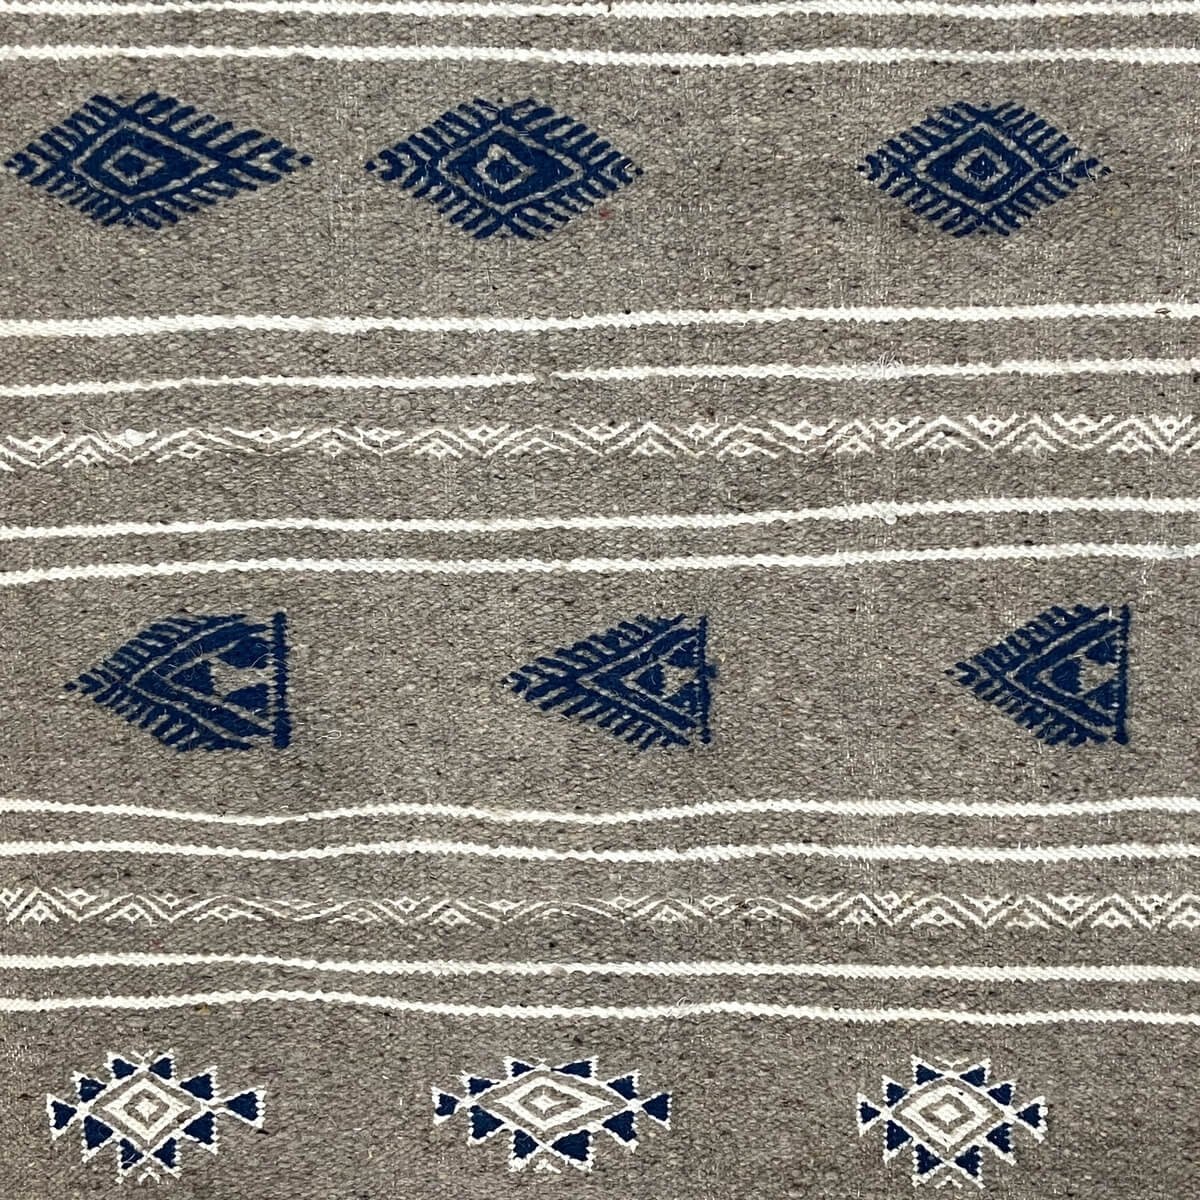 Berber tapijt Tapijt Kilim lang Ernoud 73x227 Grijs (Handgeweven, Wol, Tunesië) Tunesisch kilimdeken, Marokkaanse stijl. Rechtho